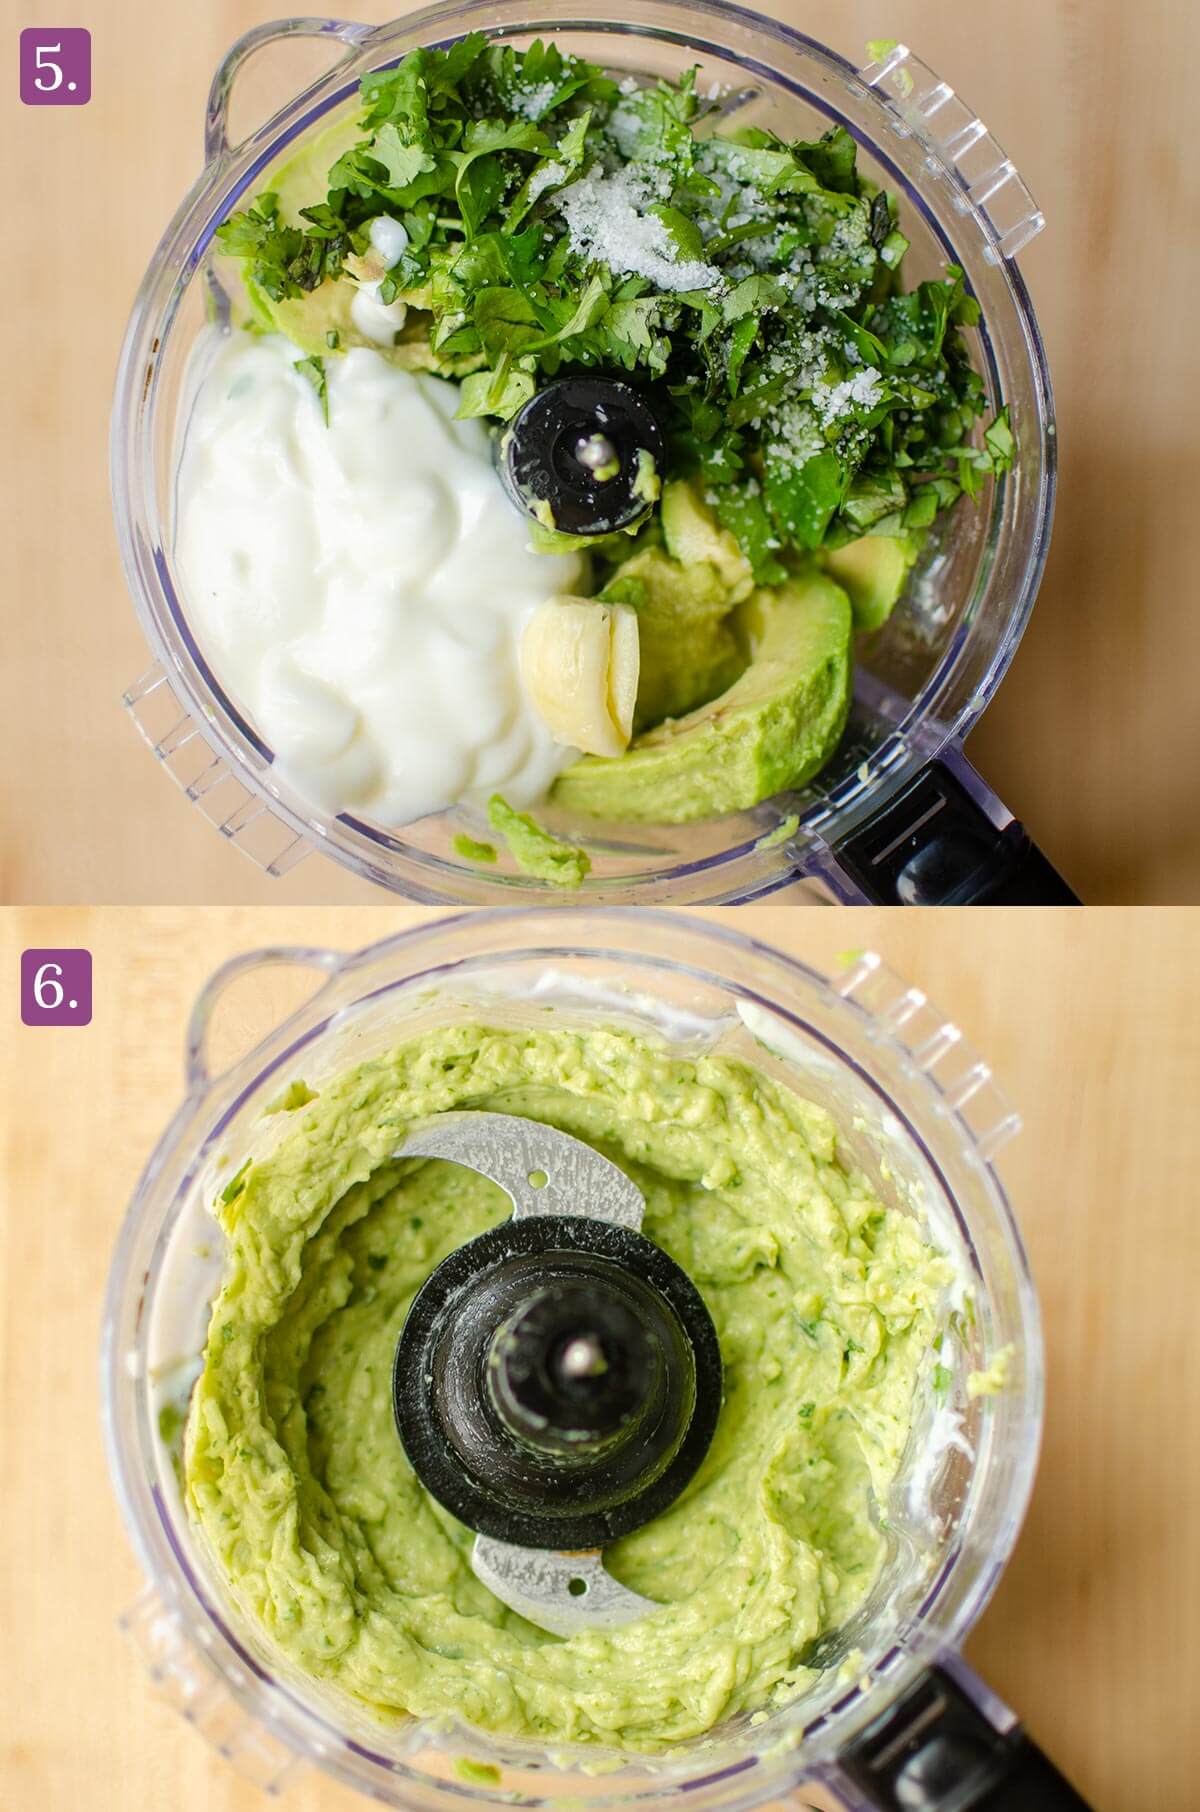 Steps for making avocado crema in a mini food processor.